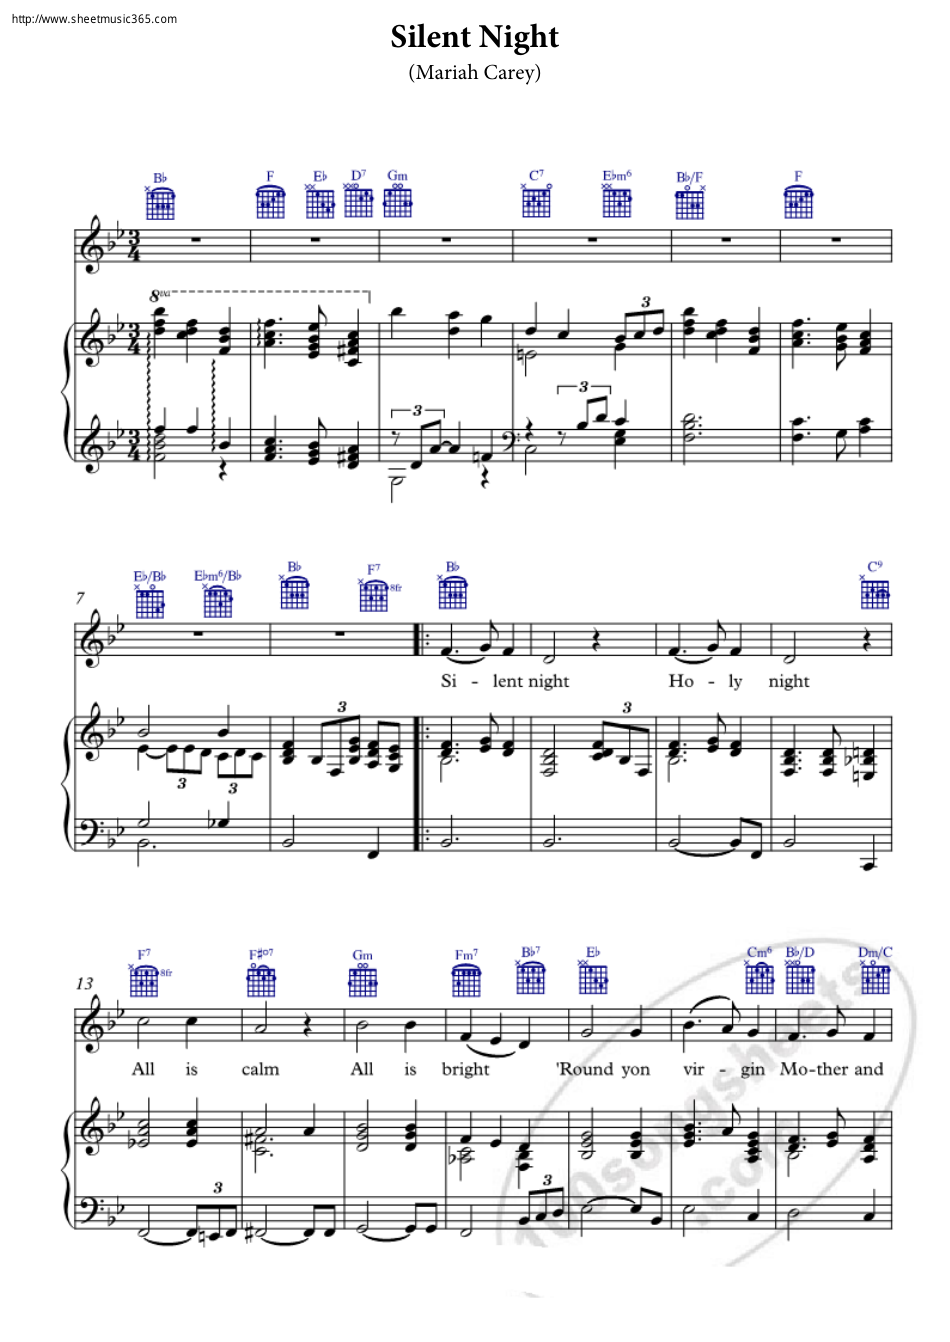 Mariah Carey - Silent Night Piano Sheet Music